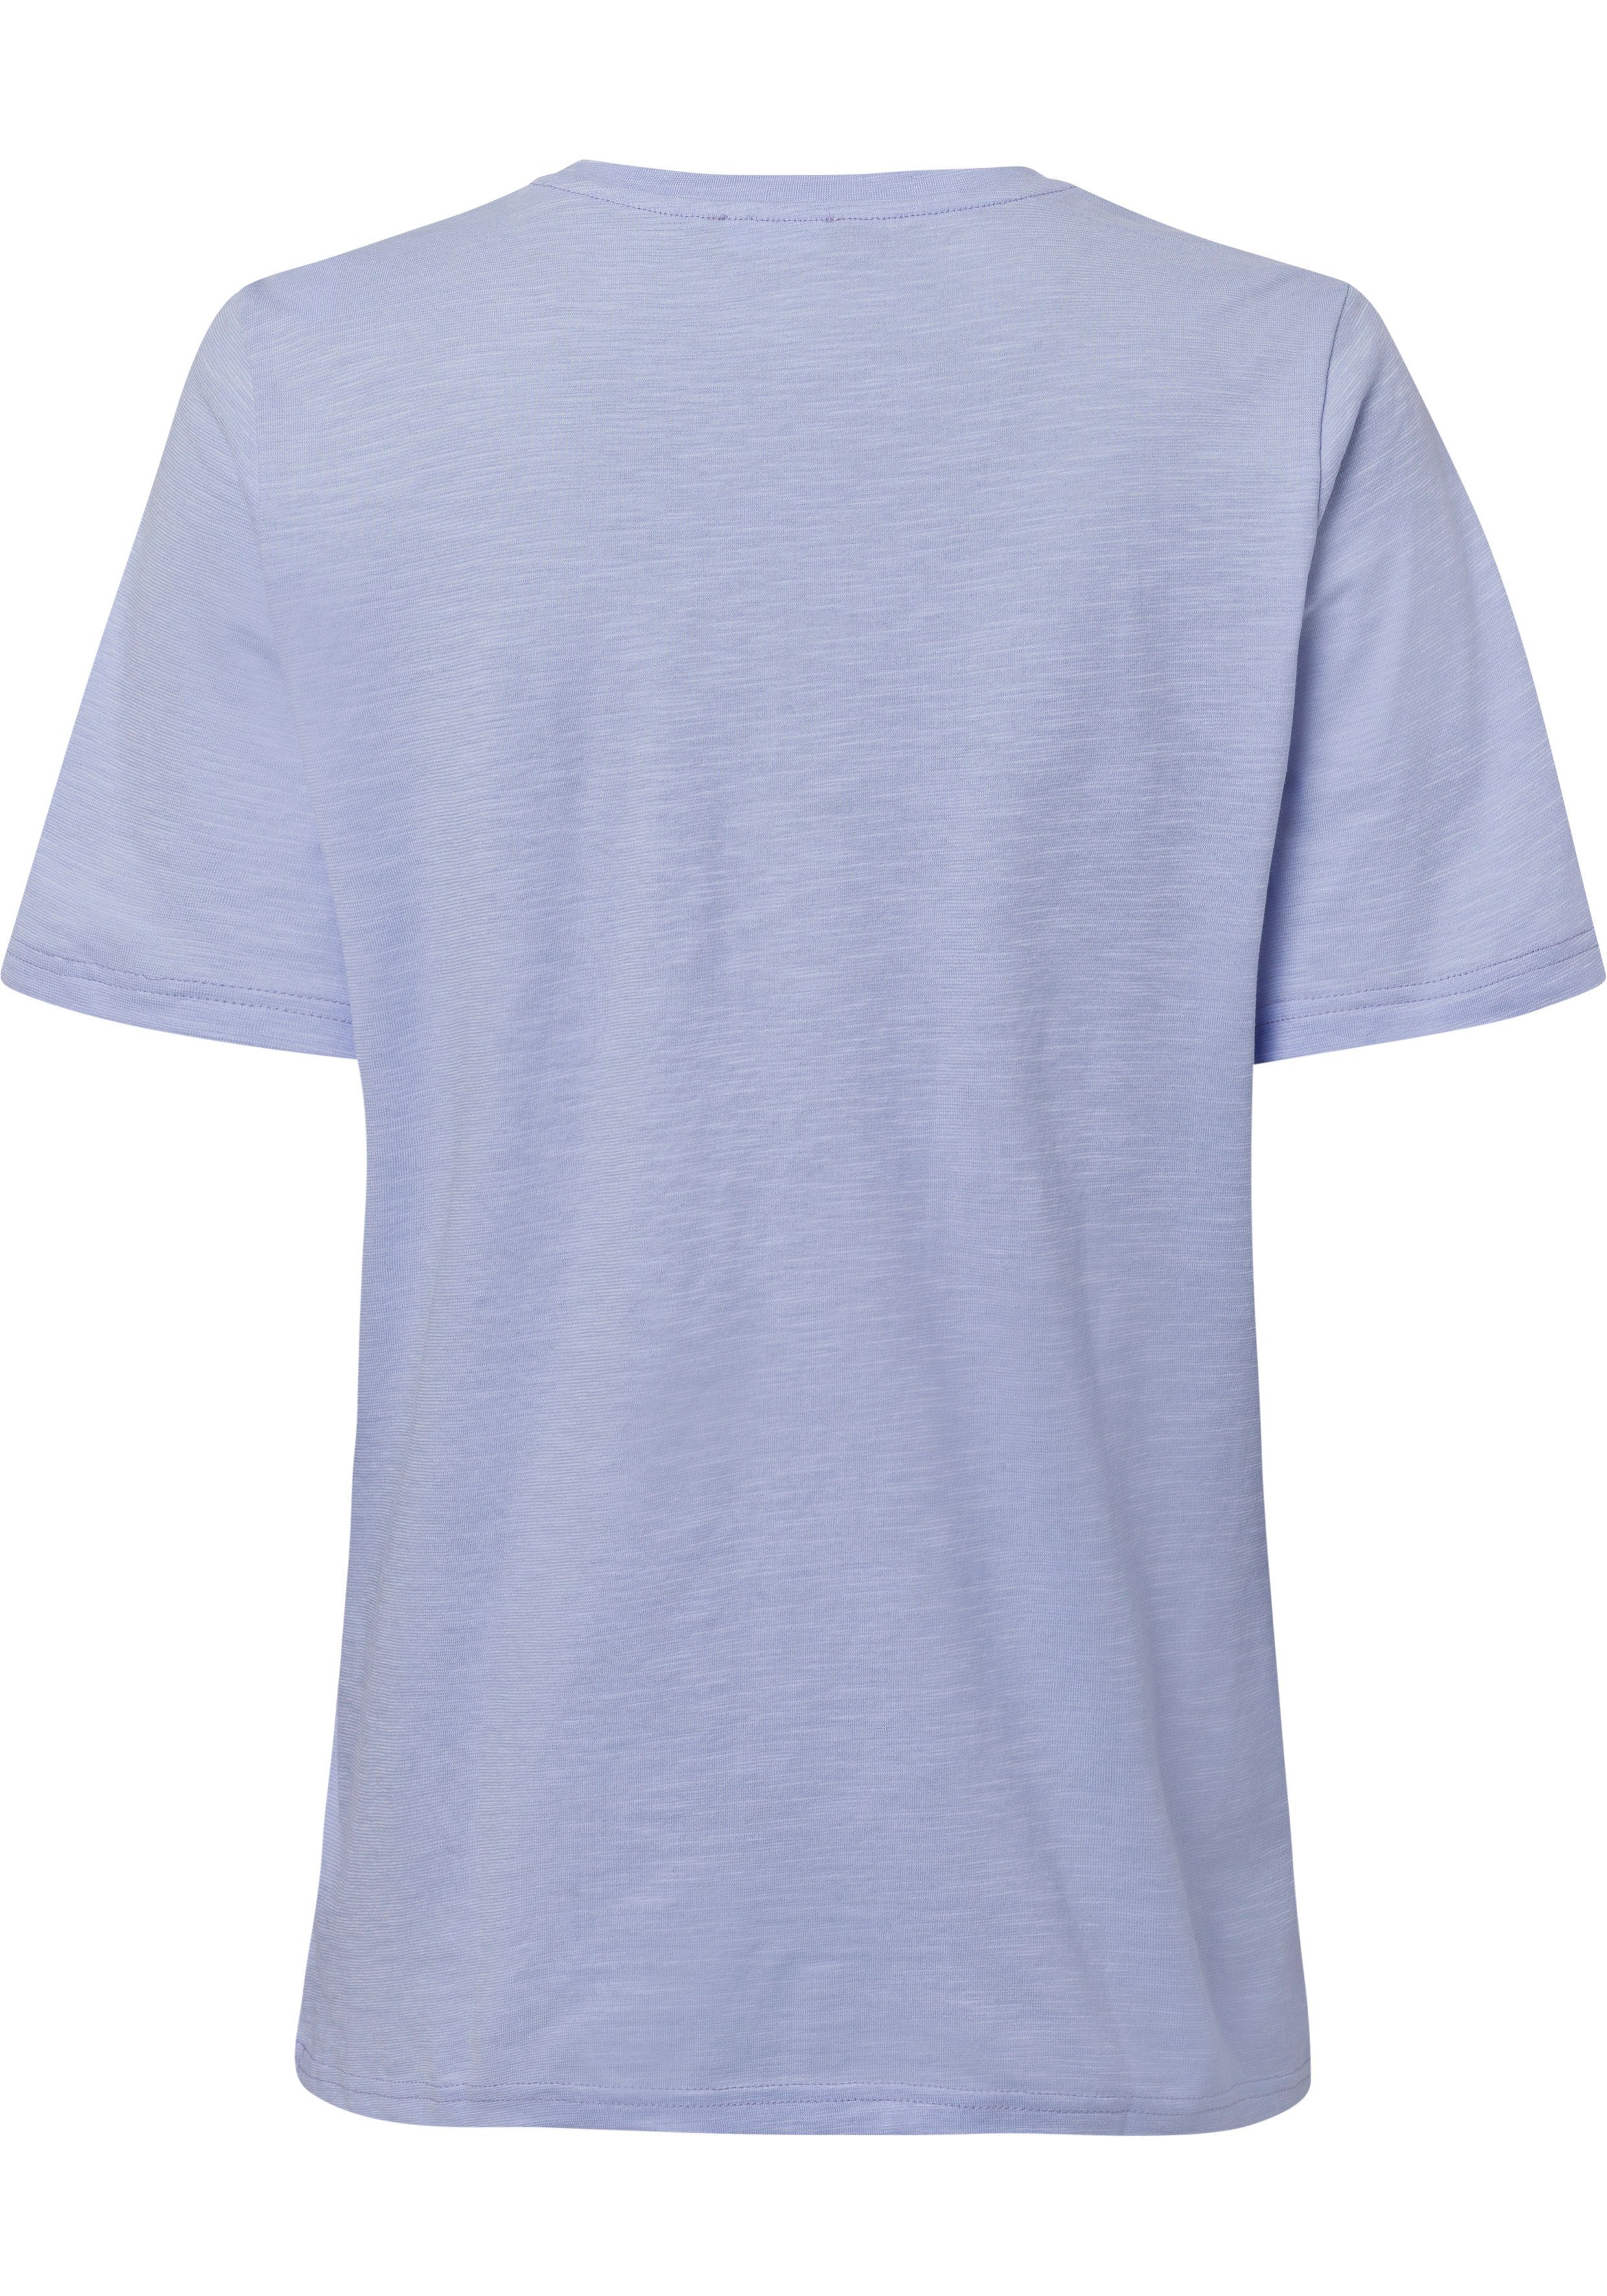 flieder cleaner Benetton in T-Shirt of Colors Basic-Optik United